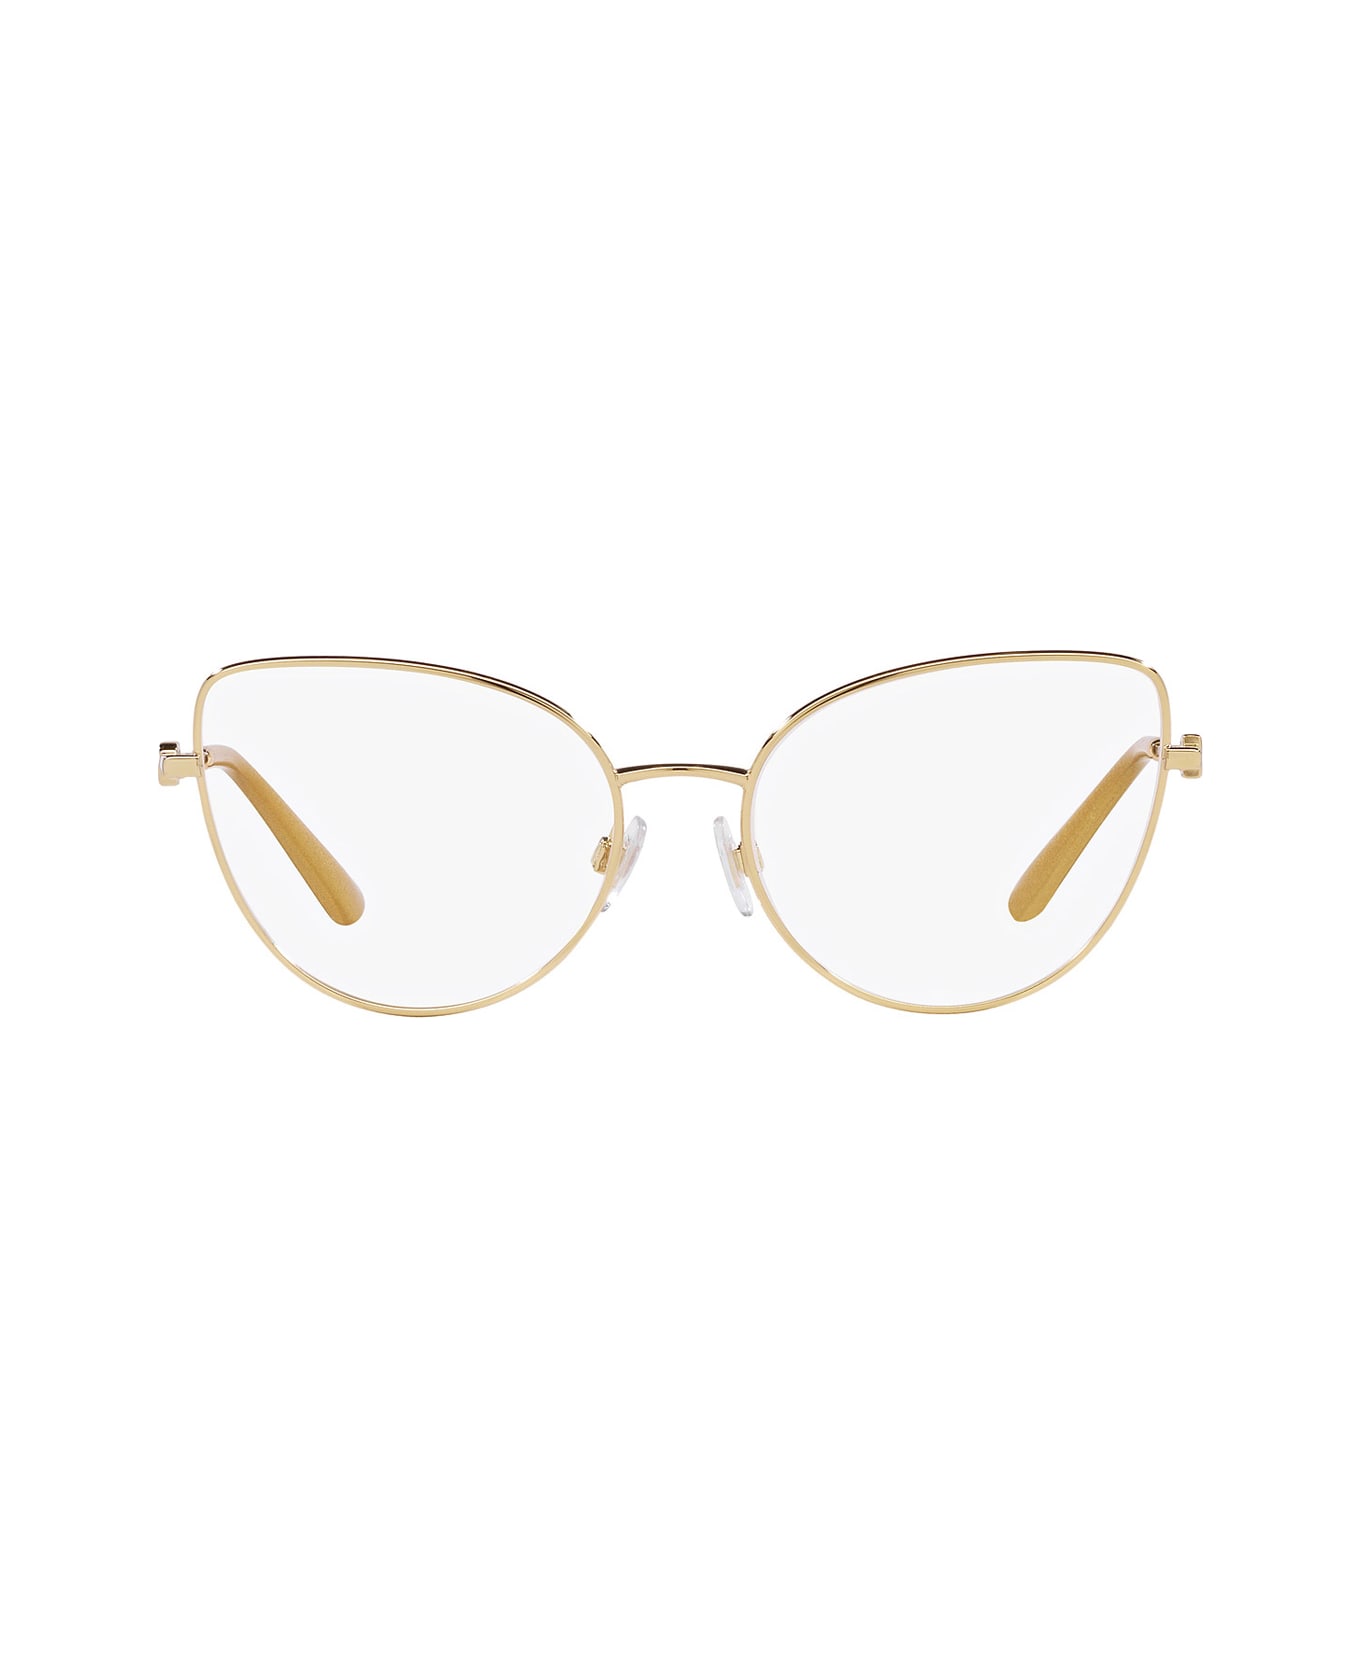 Dolce & Gabbana Eyewear Dg1347 02 Glasses - Oro アイウェア